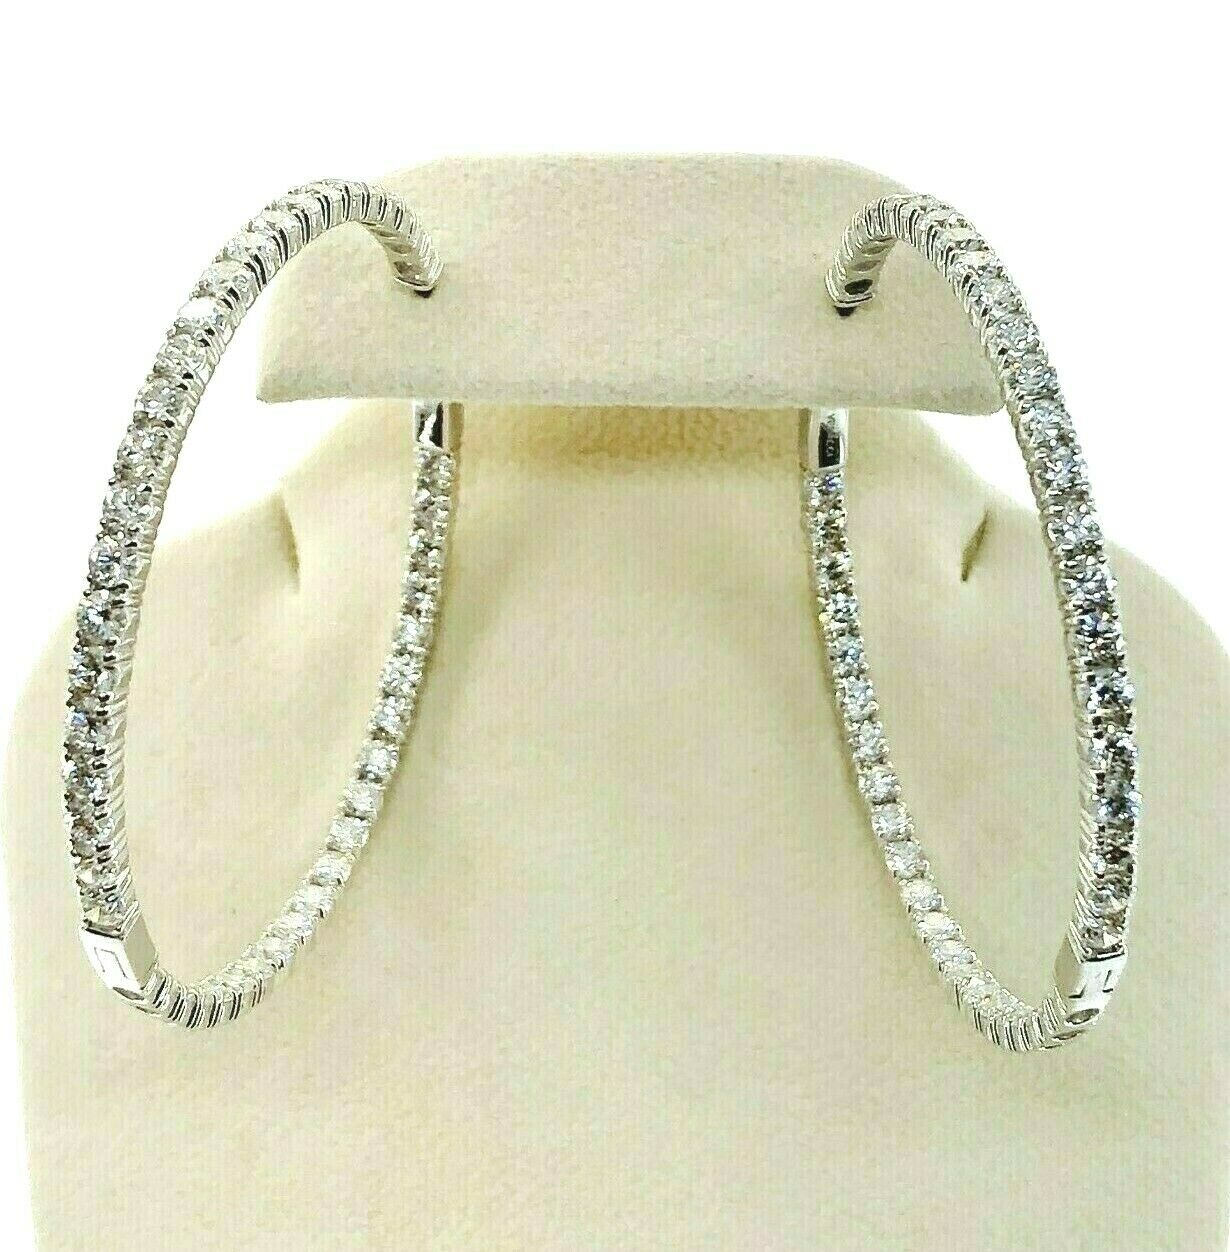 Large 9.15 Carats Diamond Inside Out Hoop Earrings 18K Gold 2.25 Inch Diameter